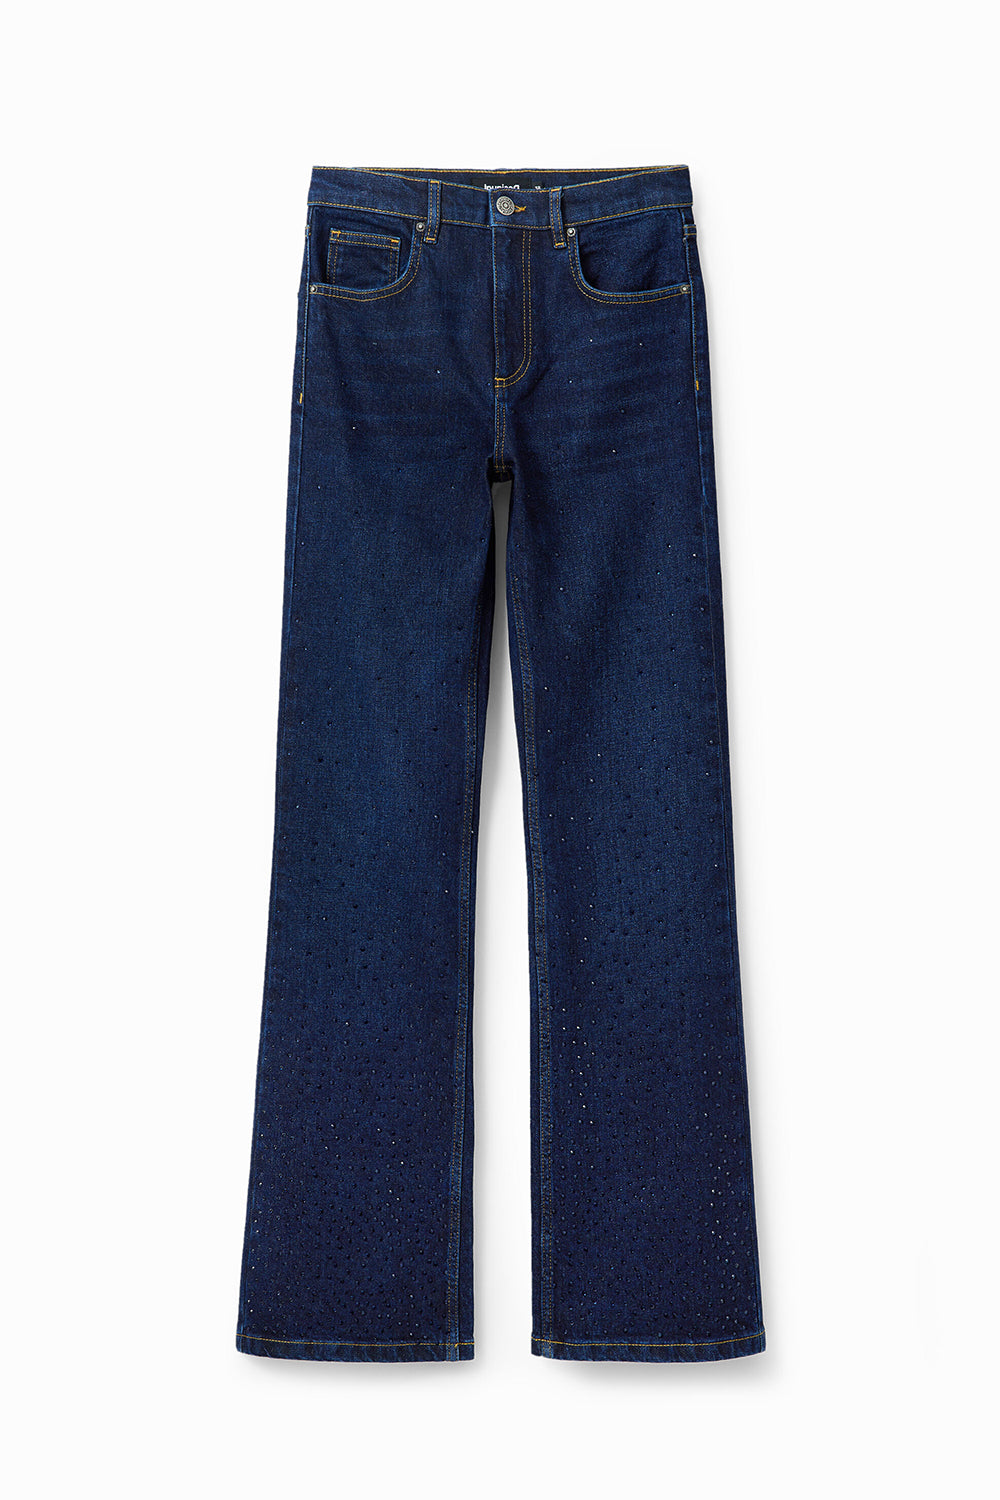 Desigual Rhinestone Flare Jeans Denim Dark Blue